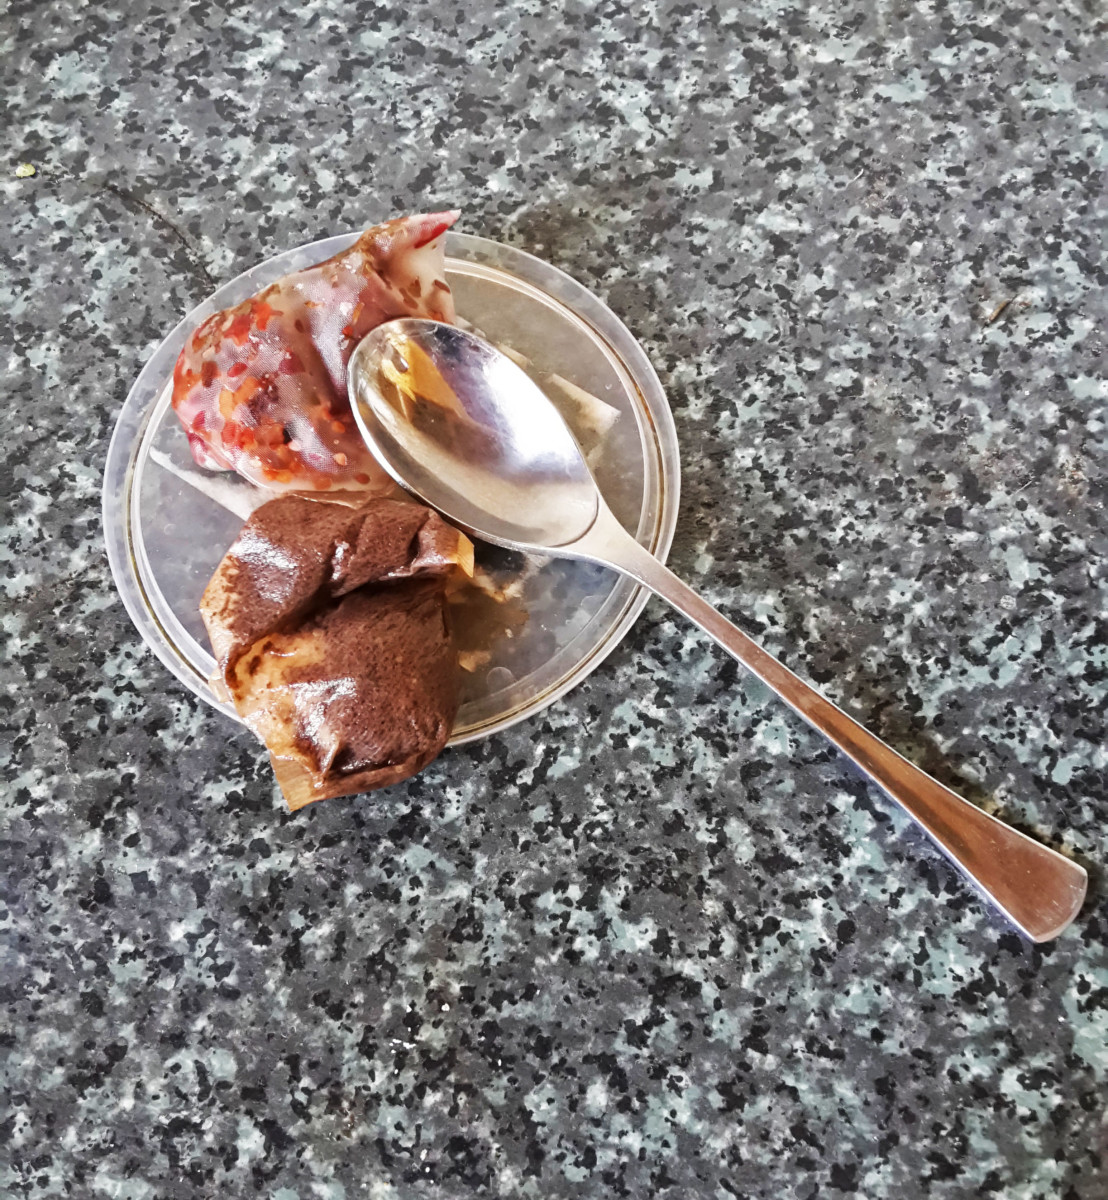 Plastic lids make great spoon rests.